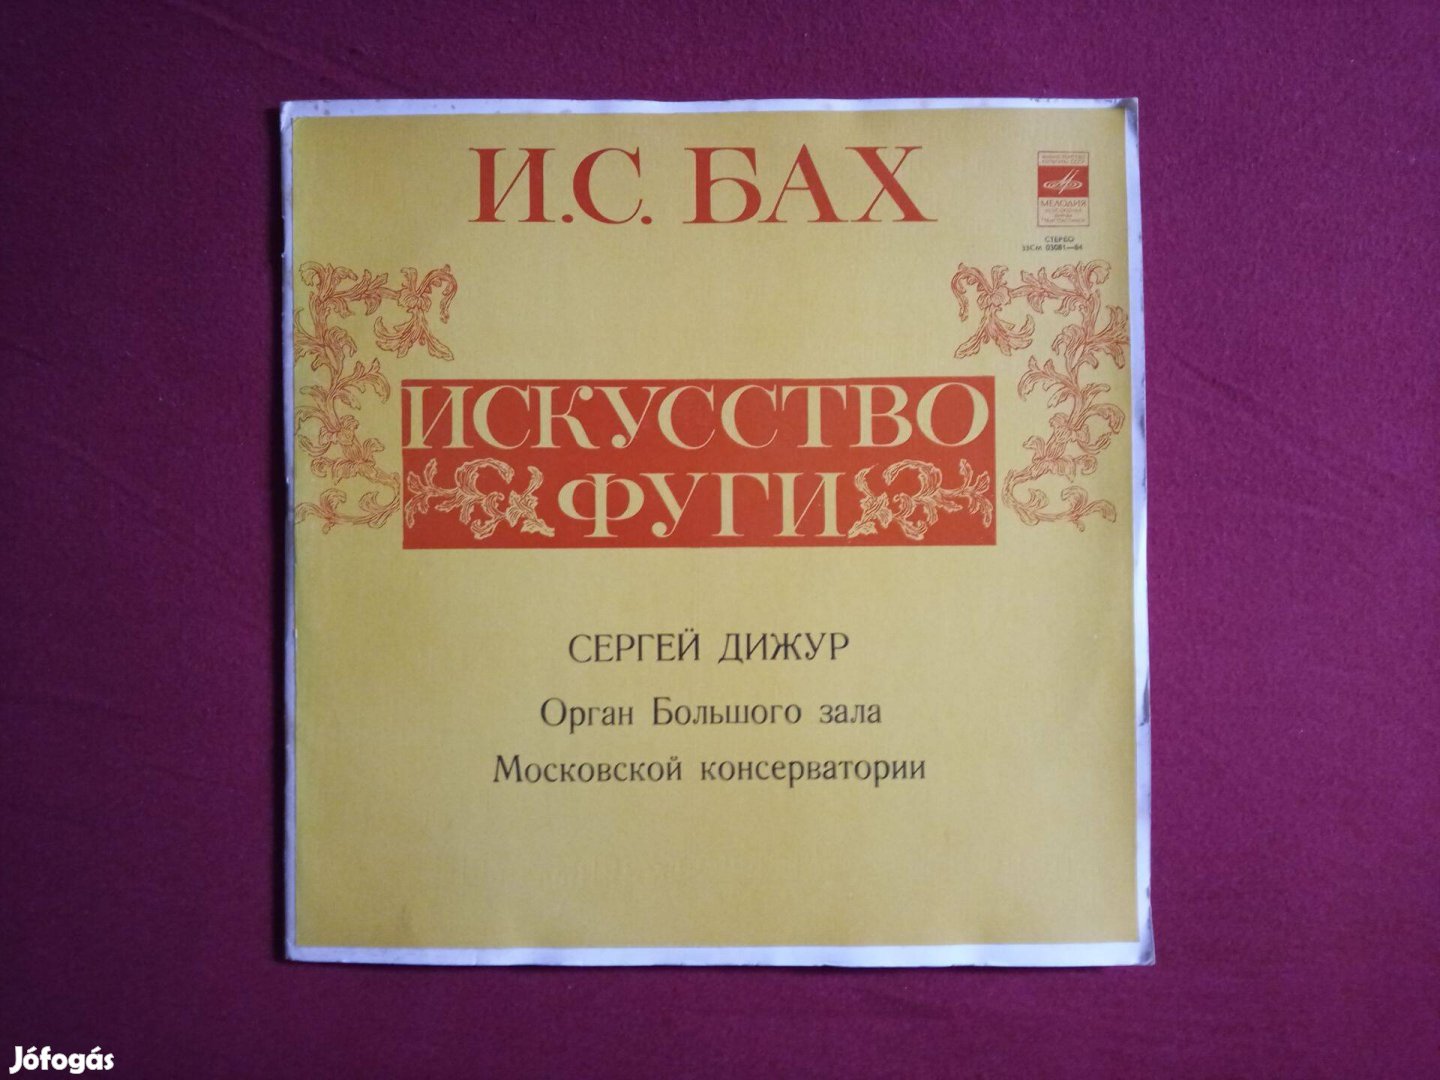 Bach : A fuga művészete Bakelit lemez dupla LP